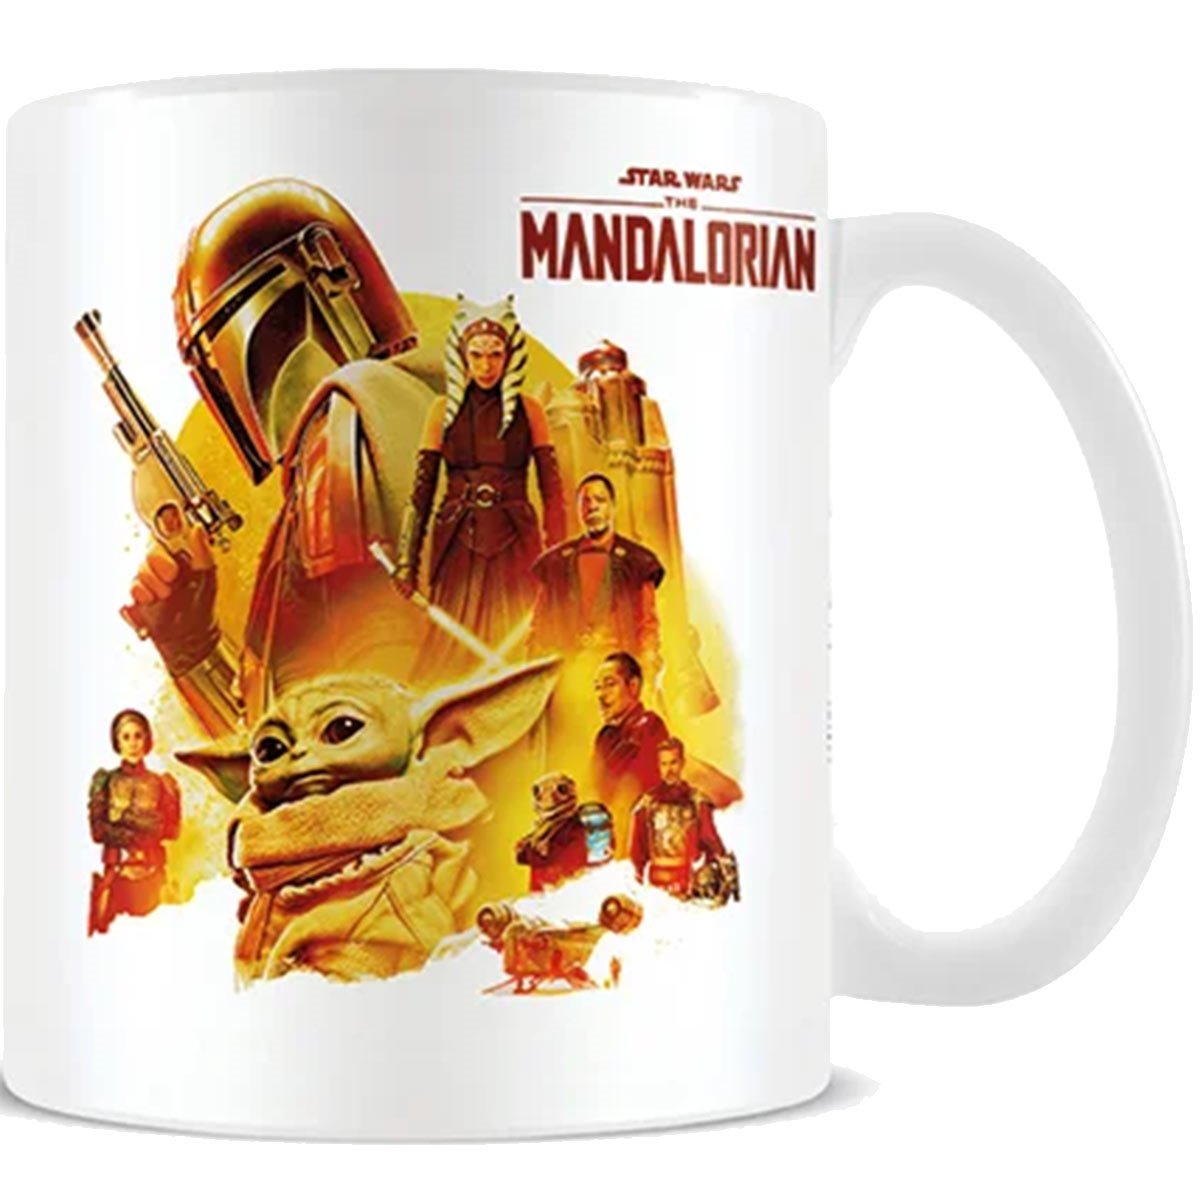 Star Wars 'The Mandalorian' Enamel Big Coffee Mug Cup – Pit-a-Pats.com